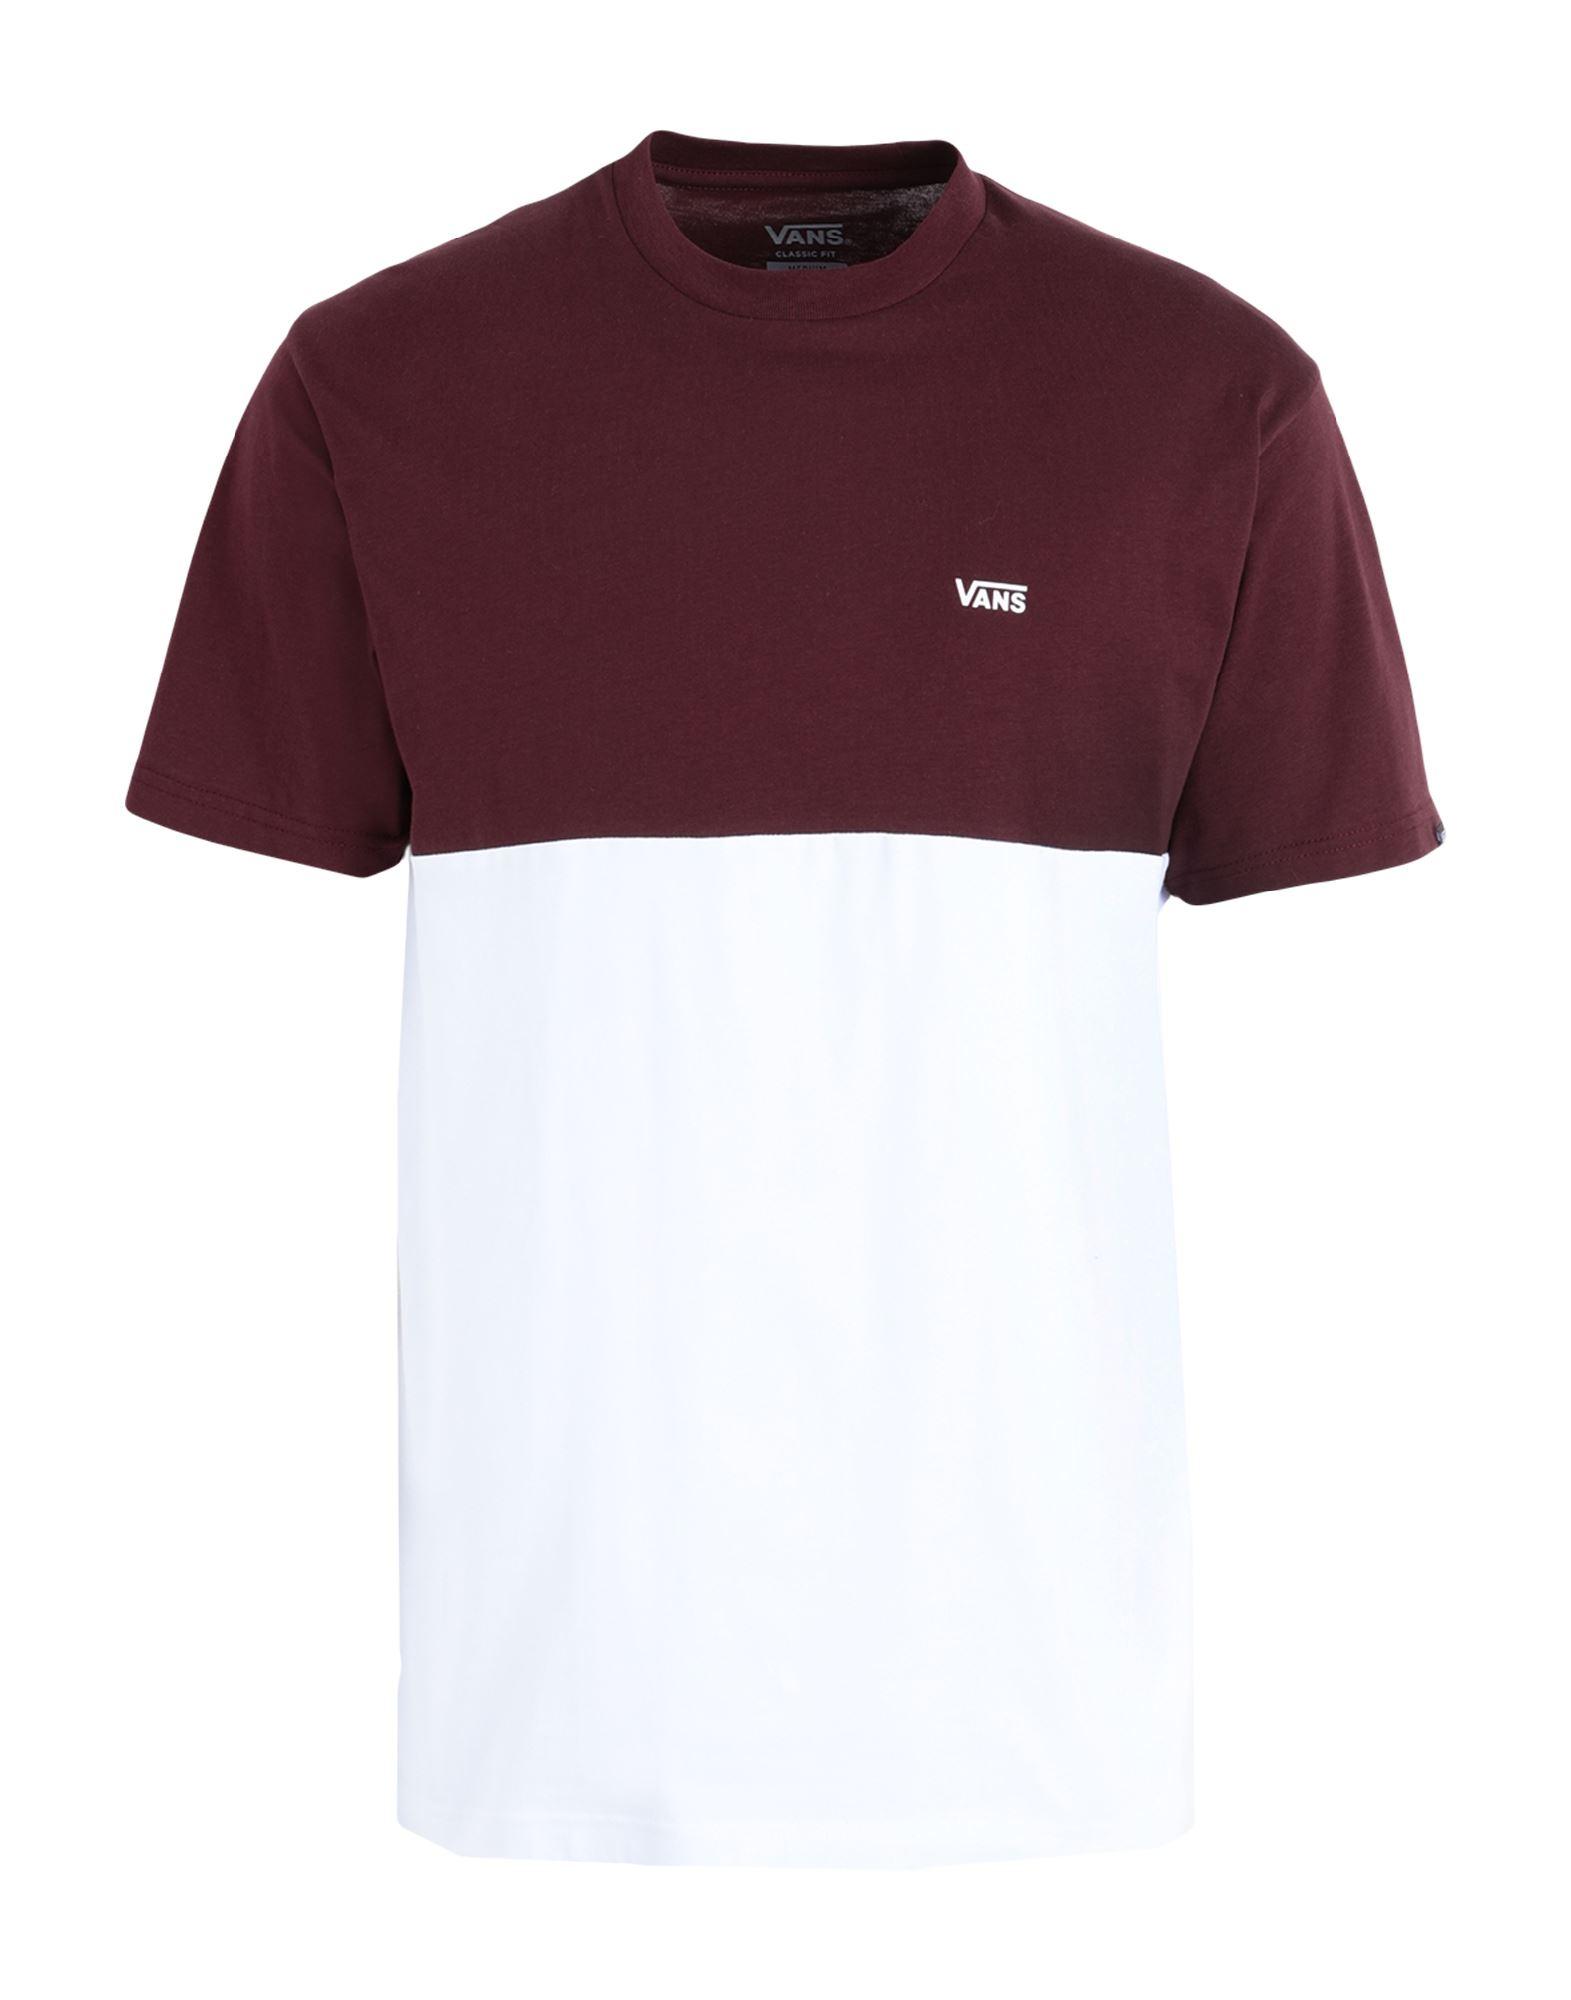 Vans Cotton T-shirt in Maroon (Purple) for Men | Lyst